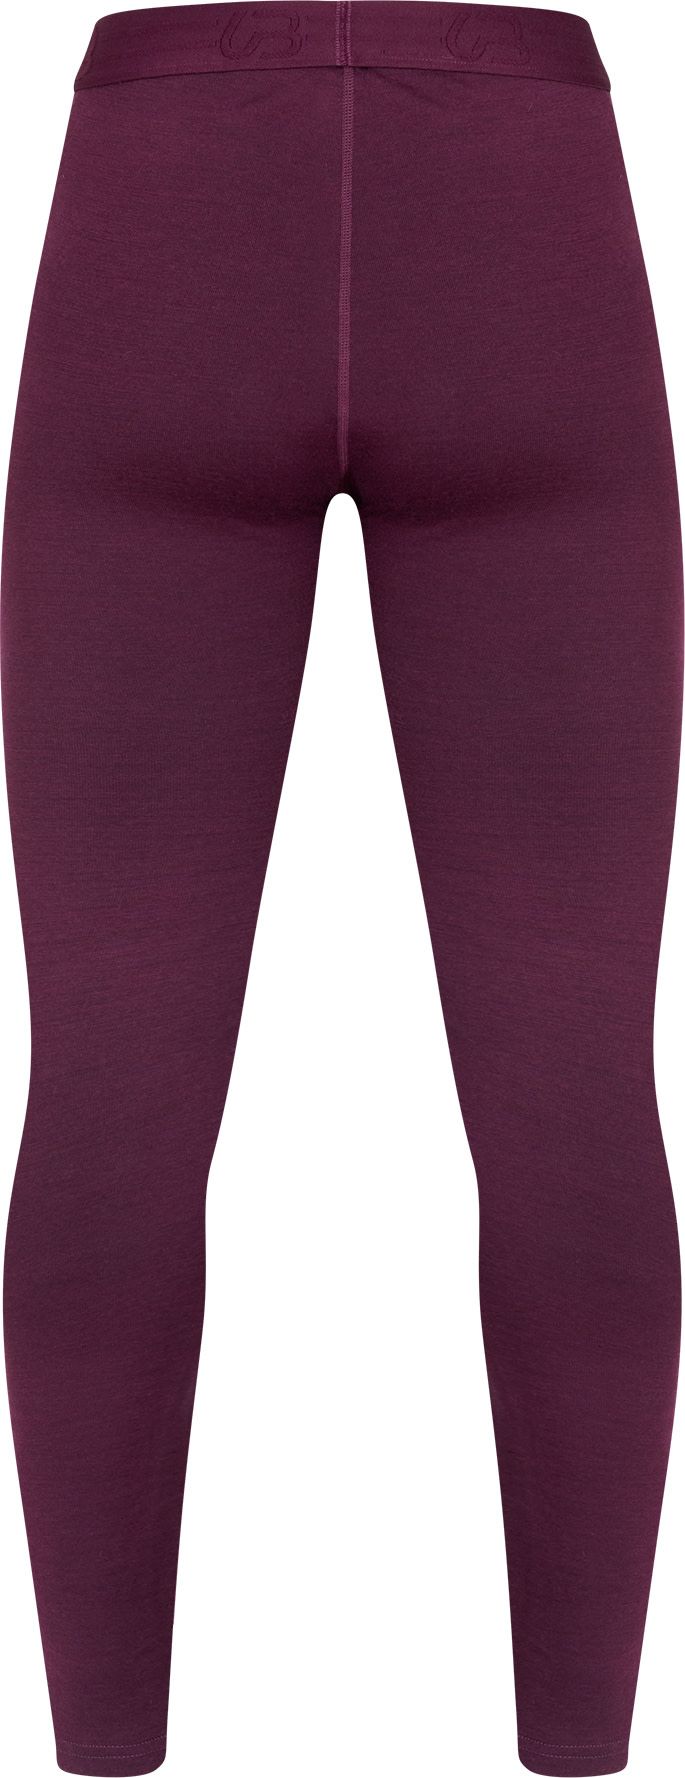 Women's Selje Merino-Bamboo Pants Potent Purple Urberg